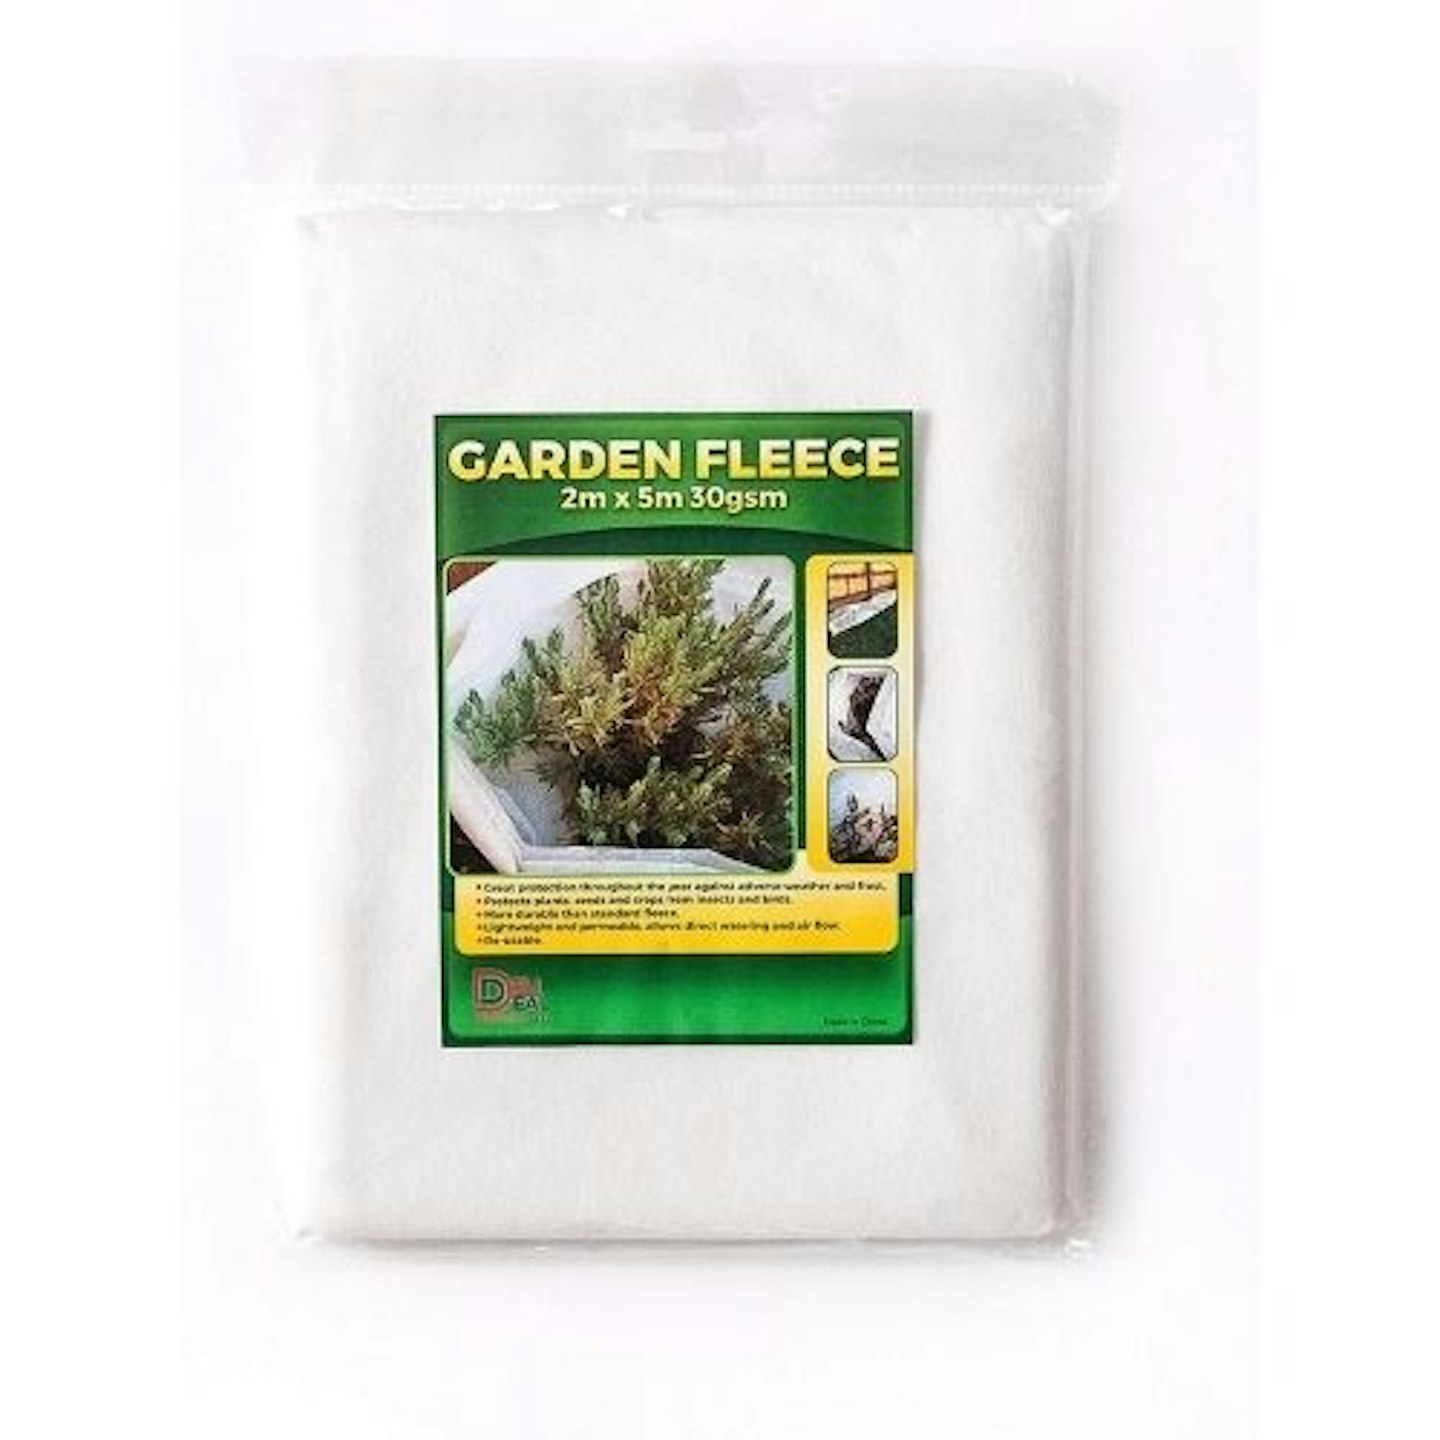 DeliDeal Delightful Deal Garden Fleece for Plants (2 x 5m)